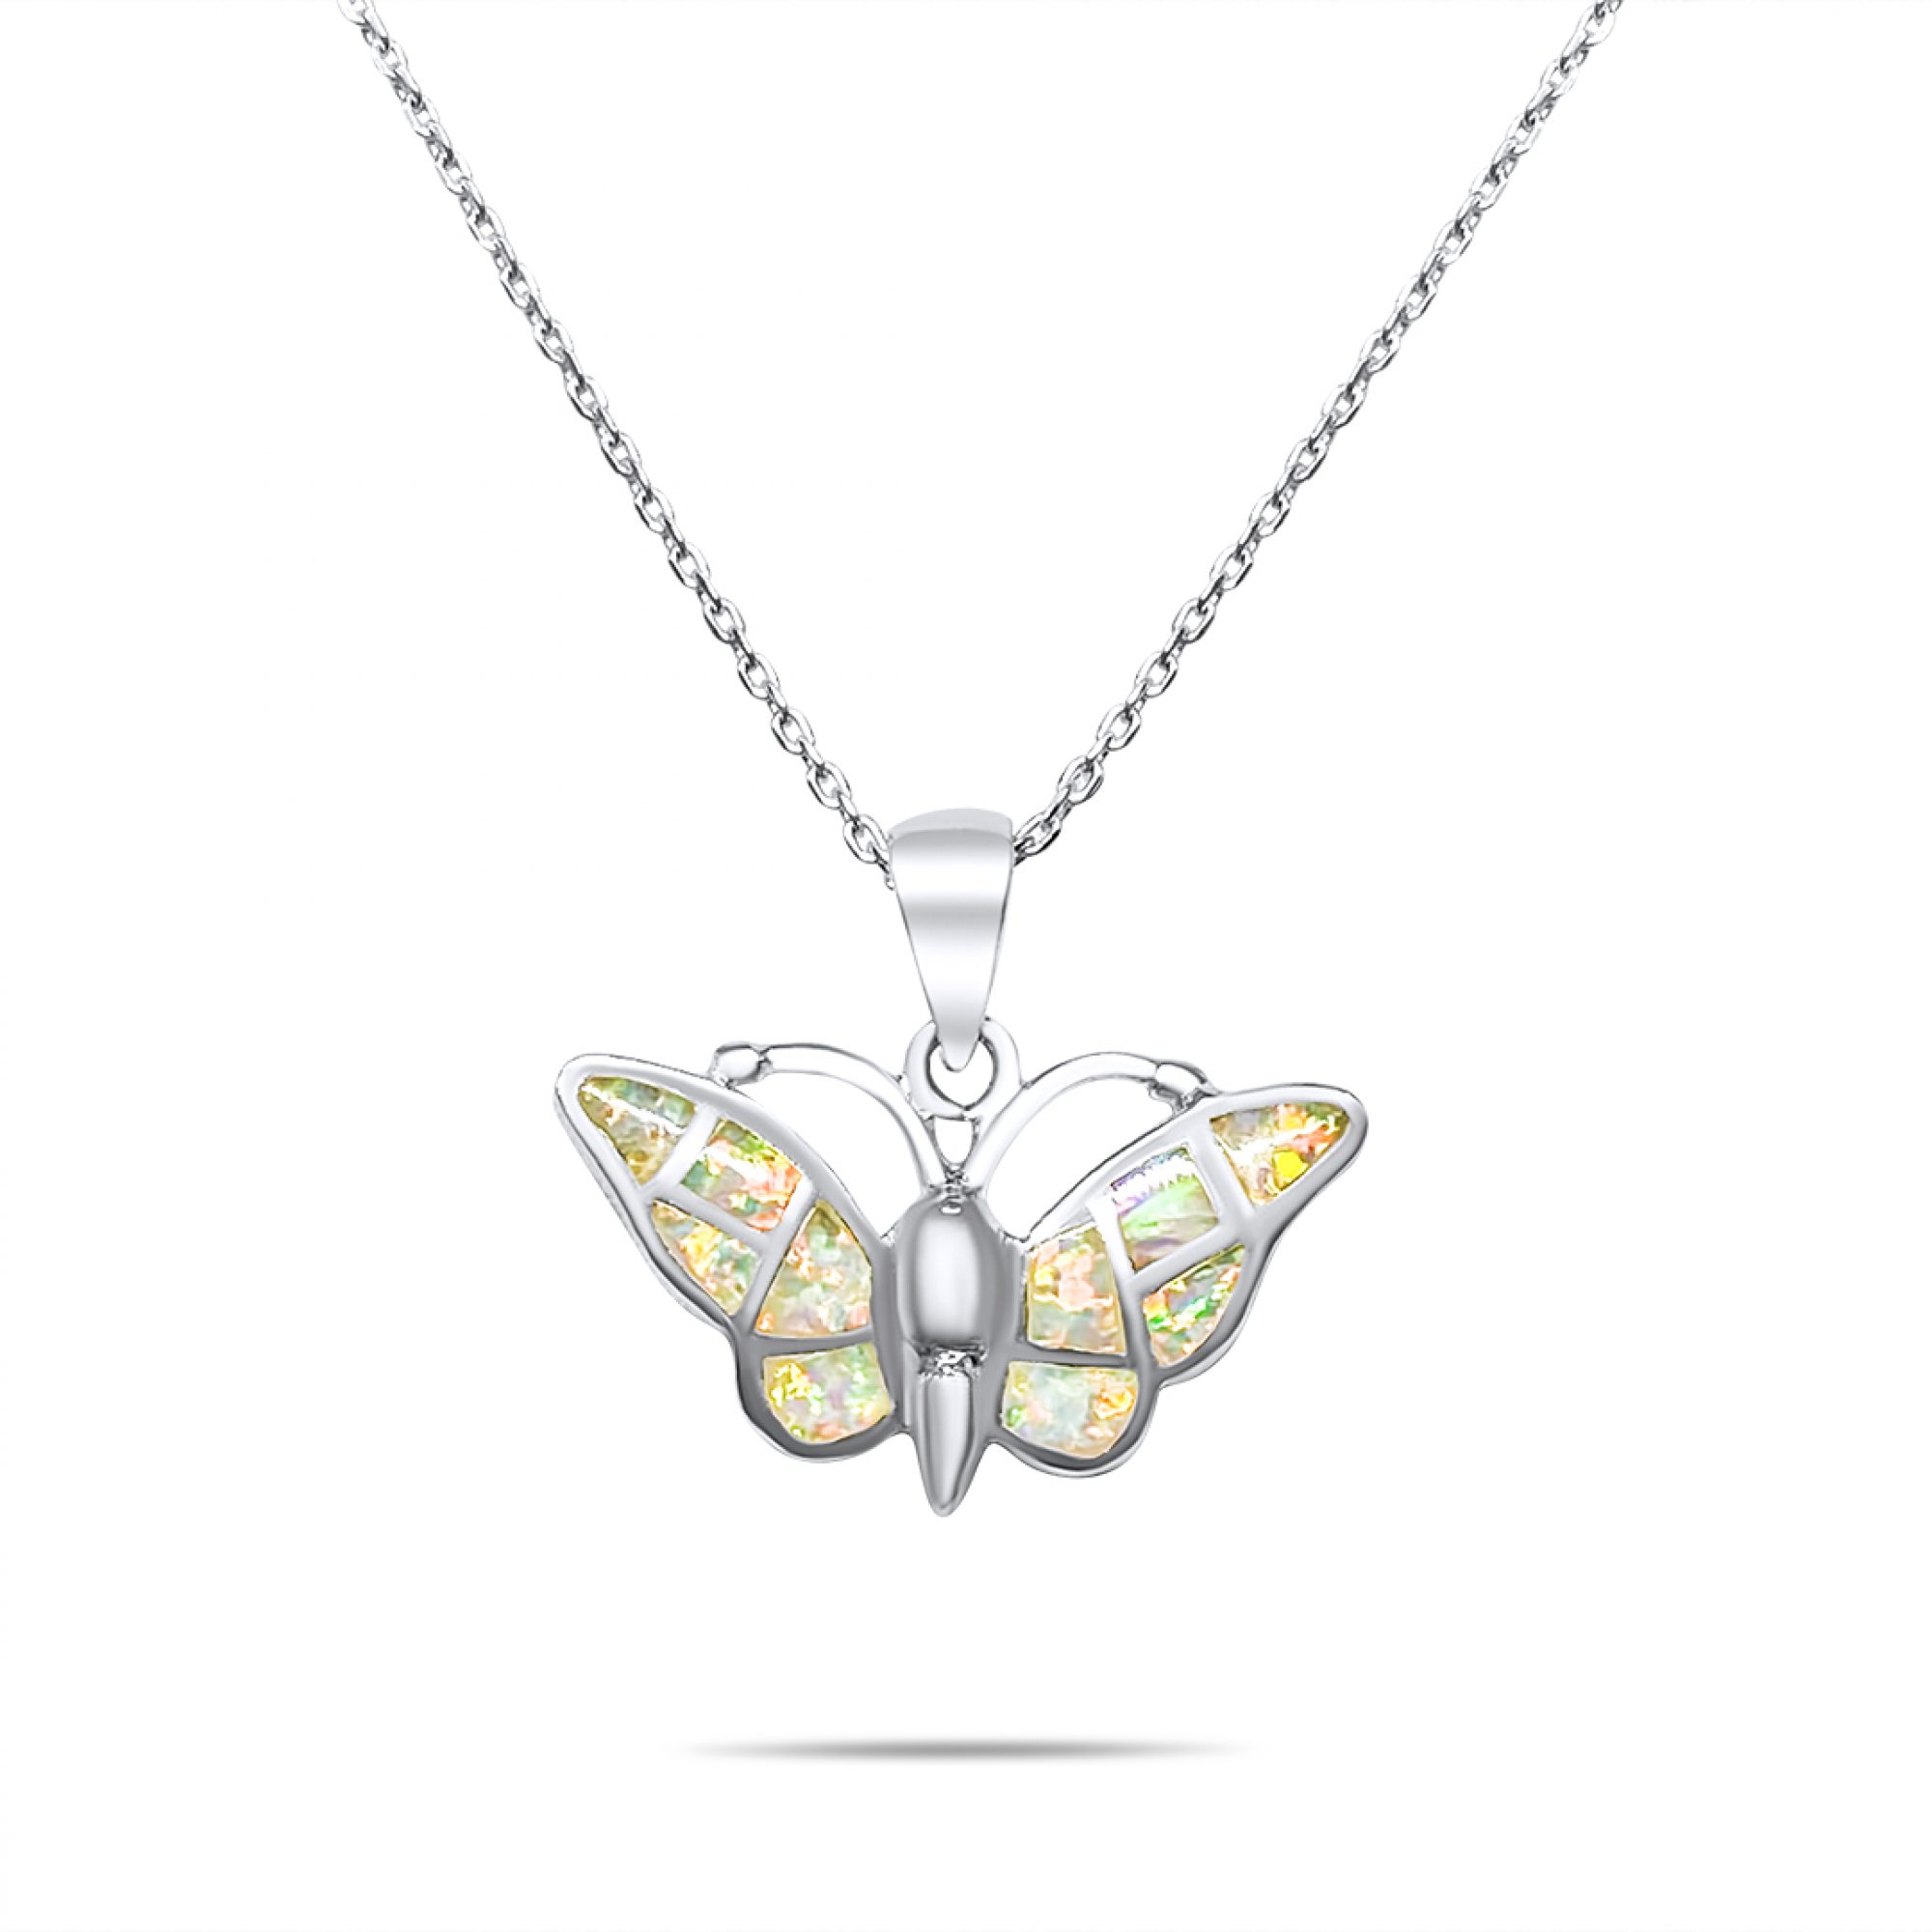 White opal butterfly pendant